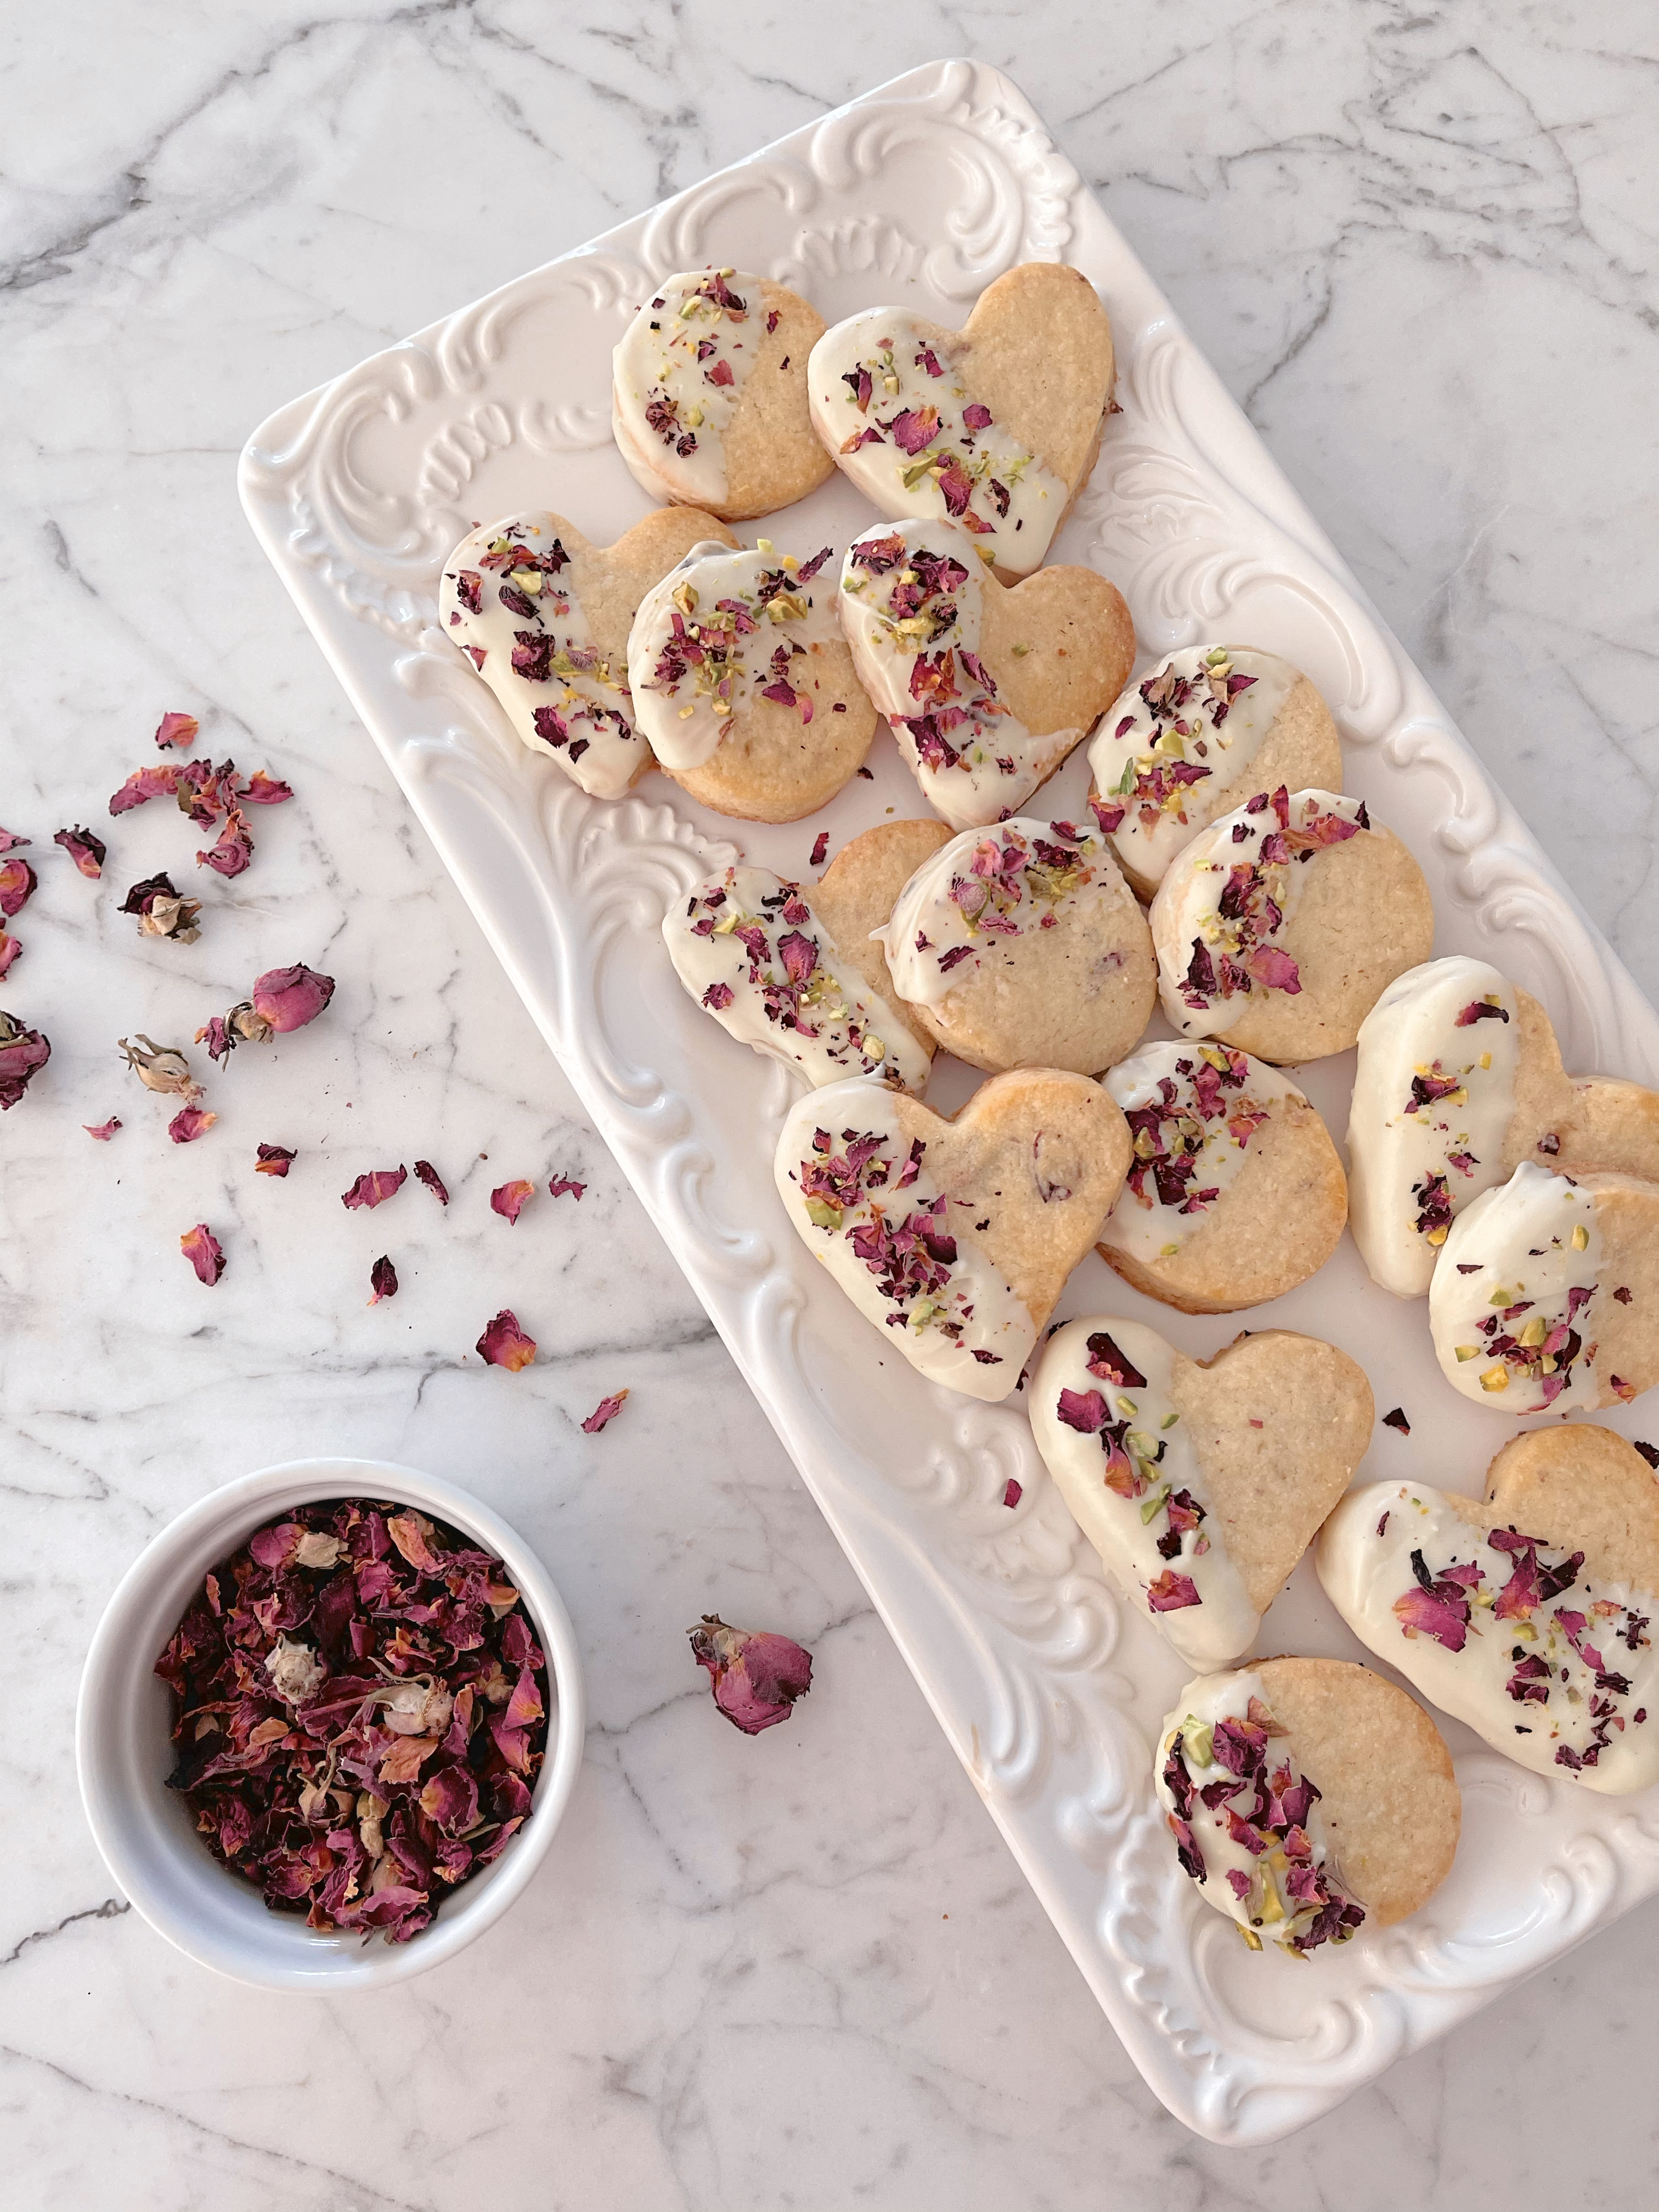 Rose Petal Shortbread Cookies